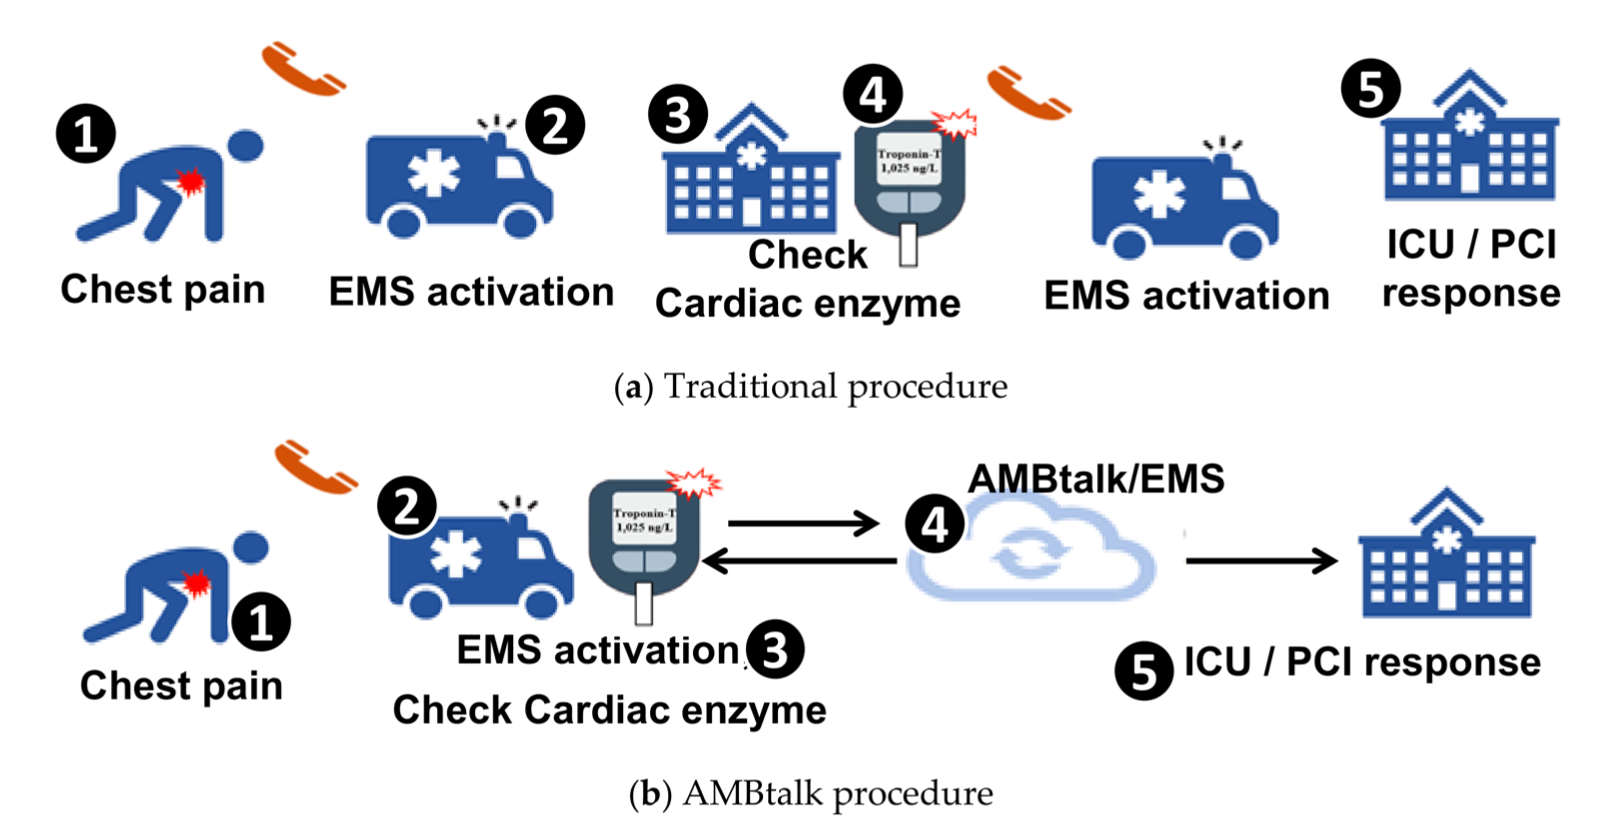 AMBtalk (Ambulance Talk): A Cardiovascular IoT Device for Ambulance Applications